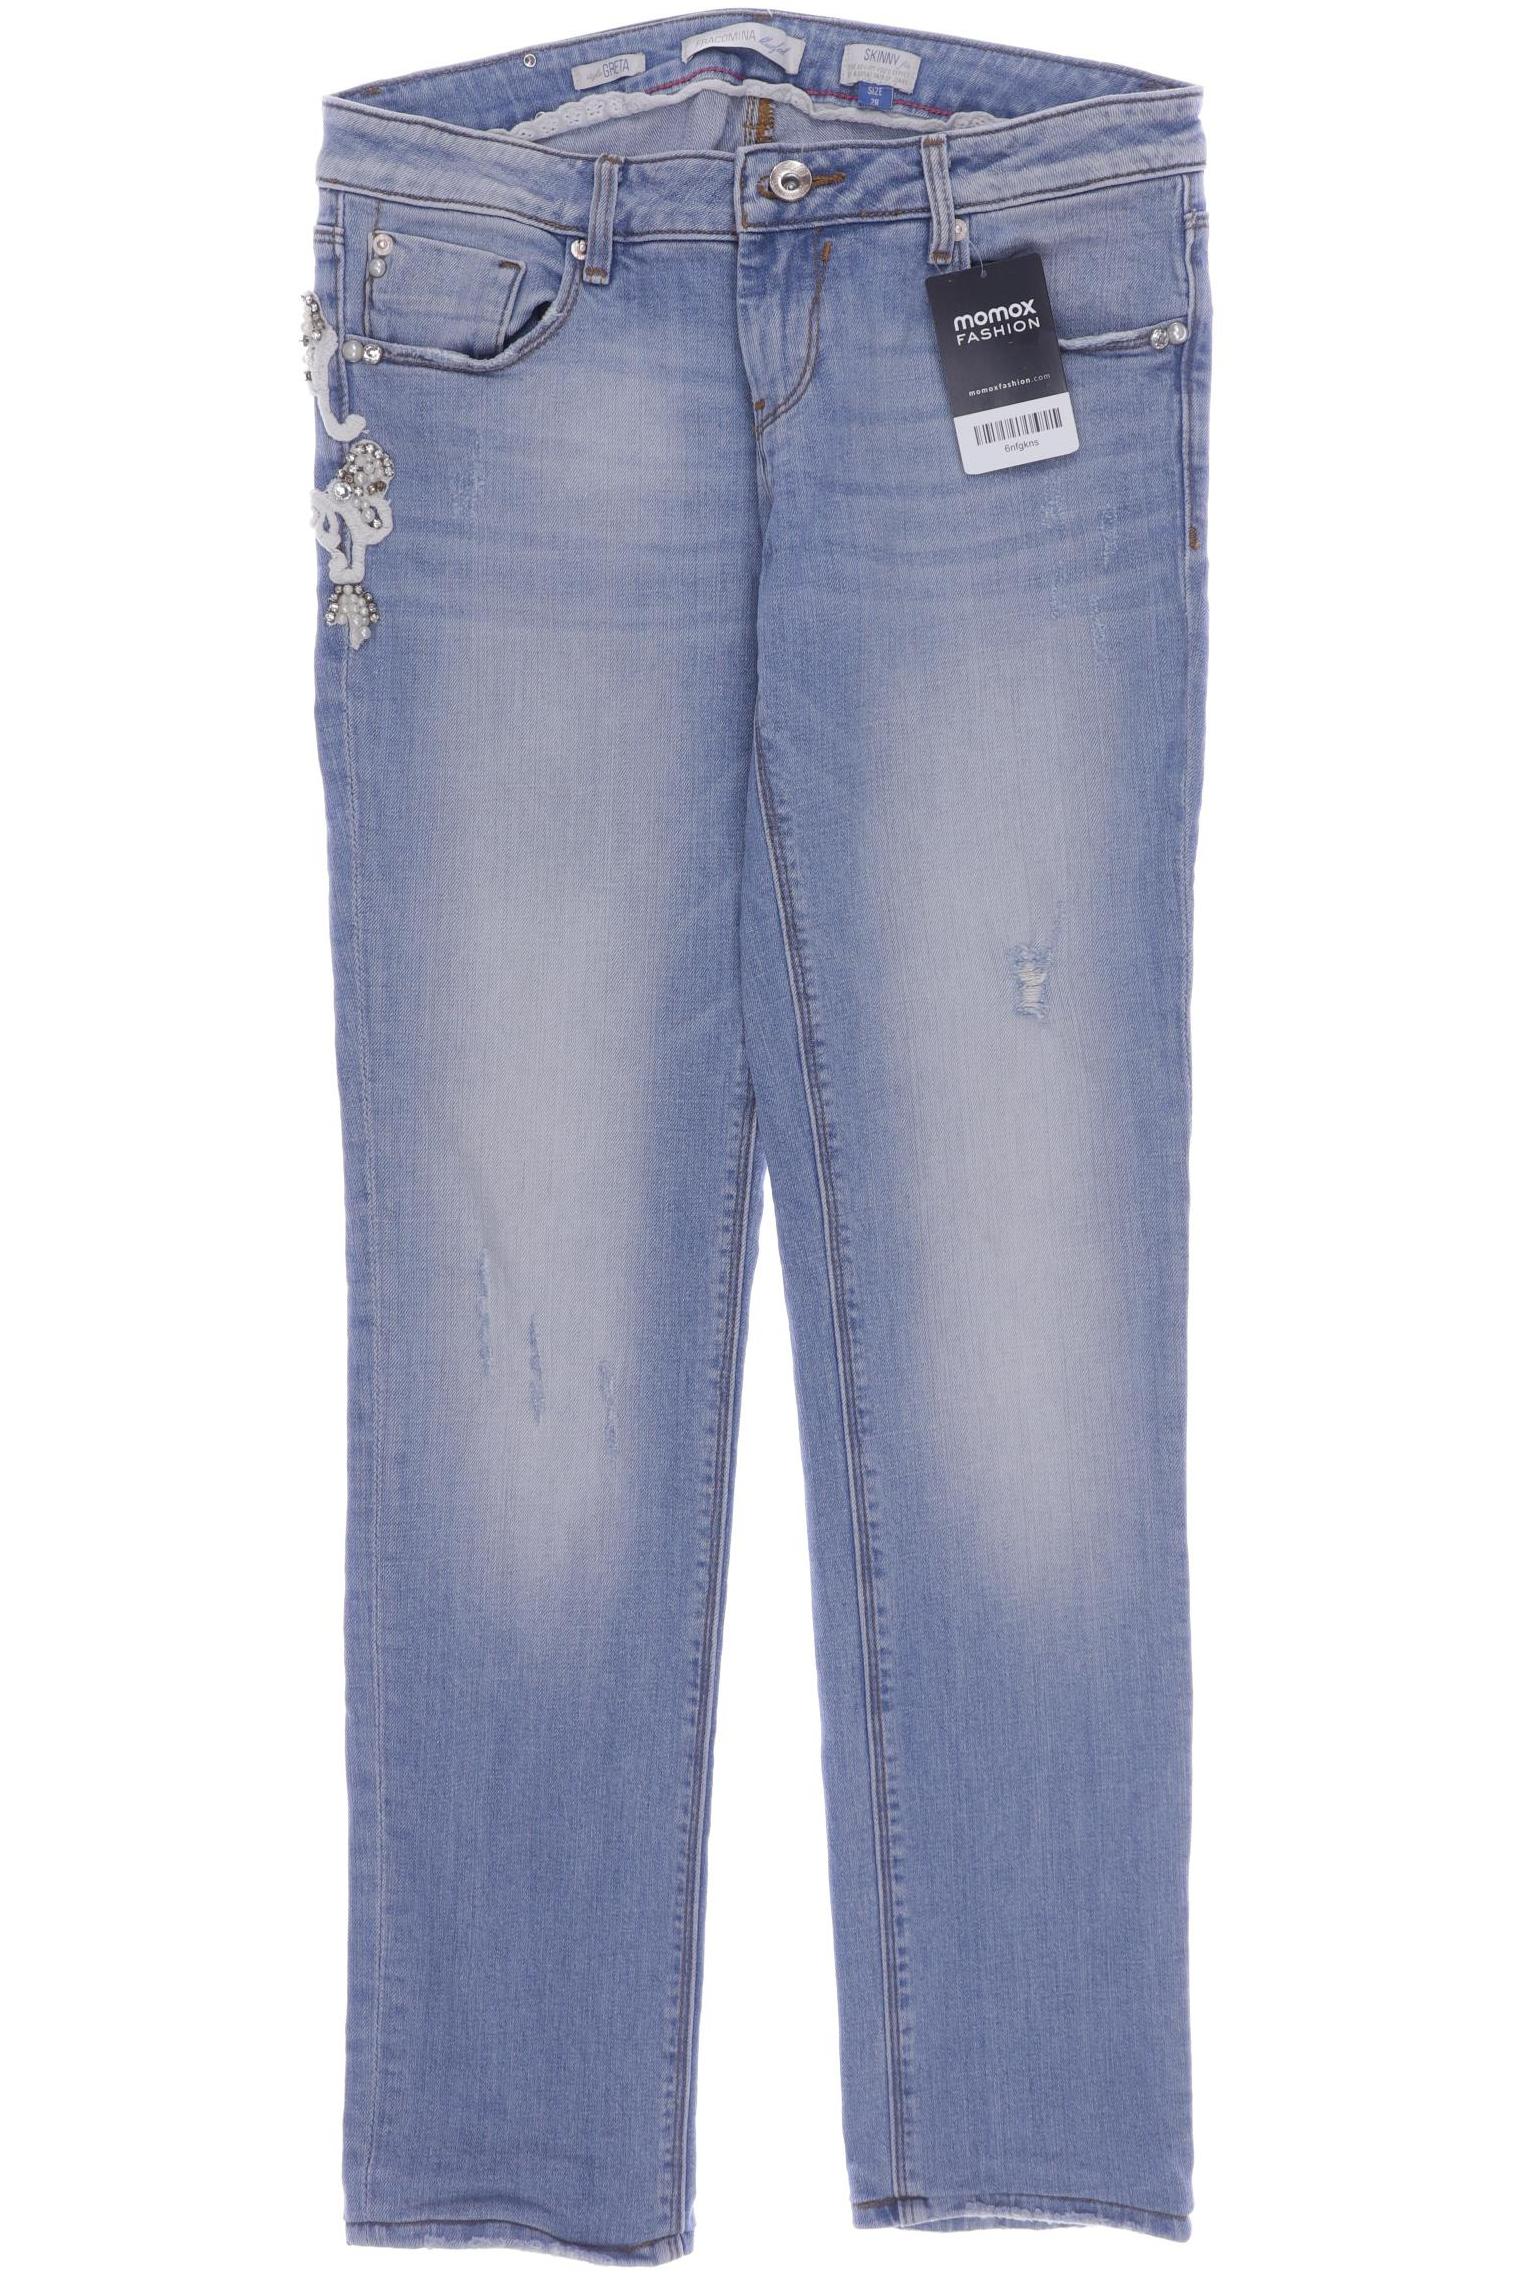 Fracomina Damen Jeans, hellblau von Fracomina